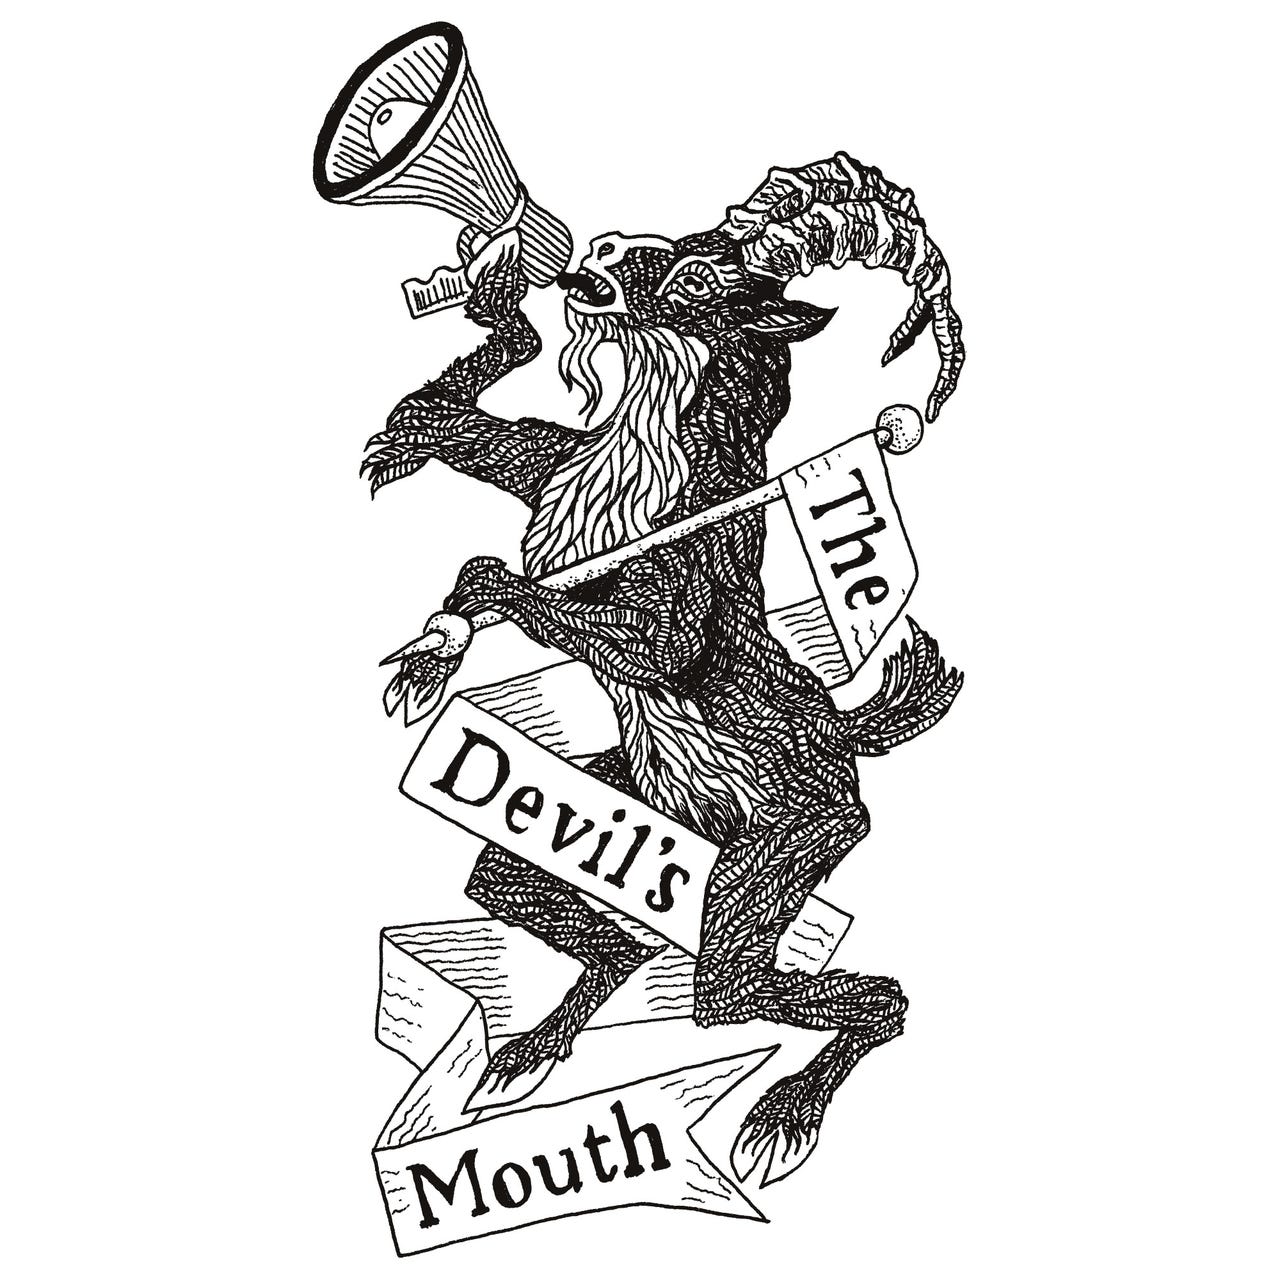 Artwork for The Devil's Mouth